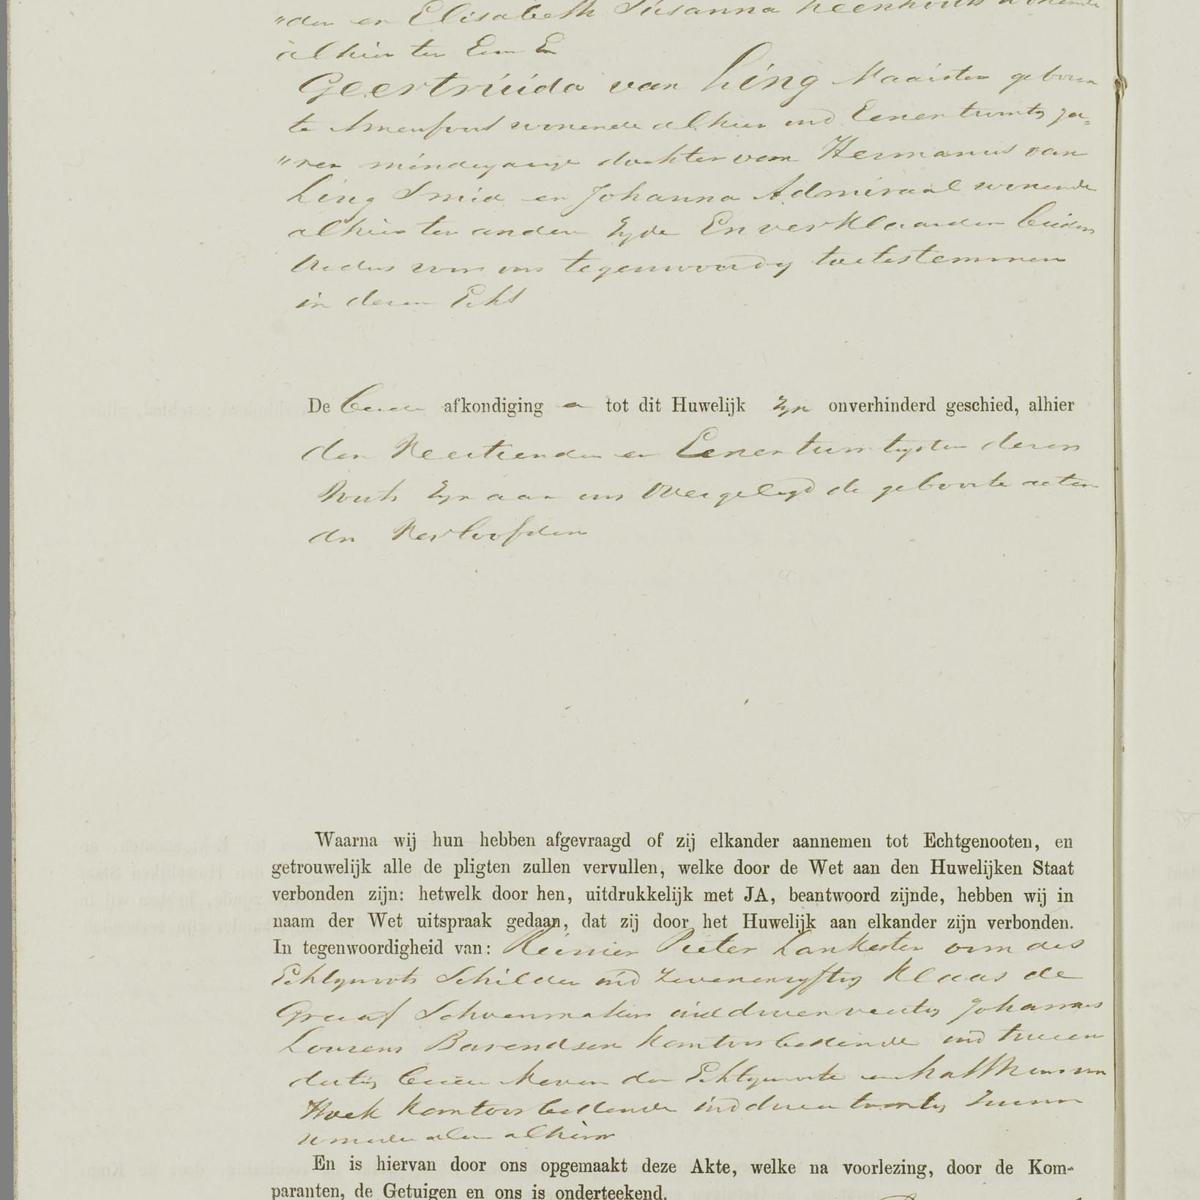 Civil registry of marriages, Amsterdam, 1873, sheet 81v